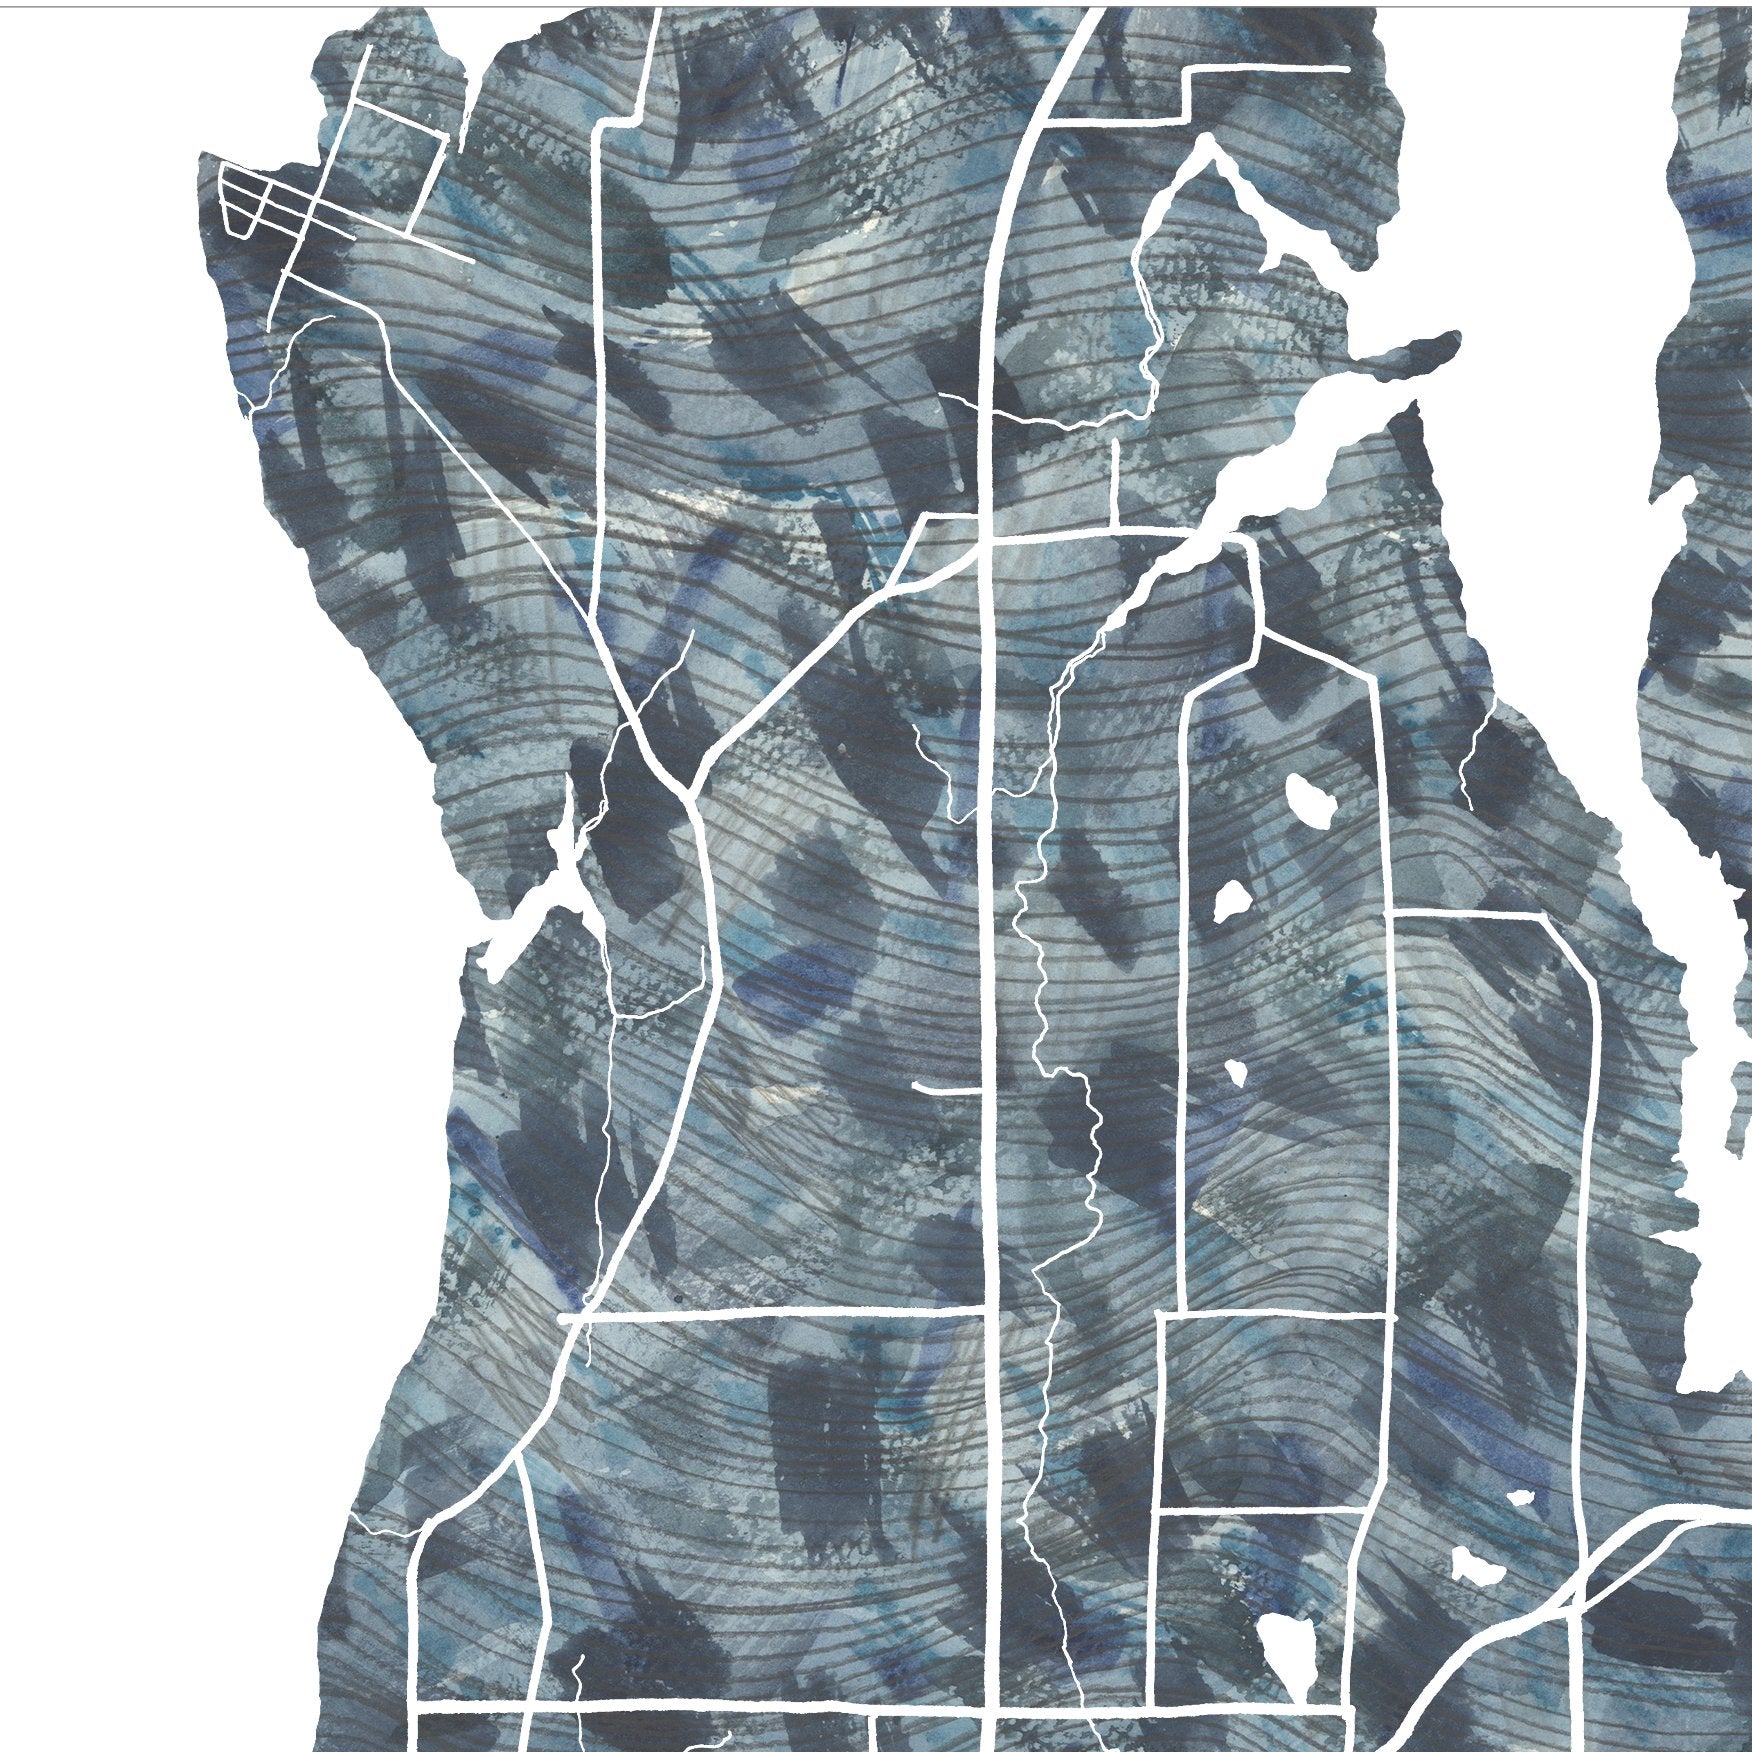 Greater OLYMPIA Urban Fabrics City Map: PRINT